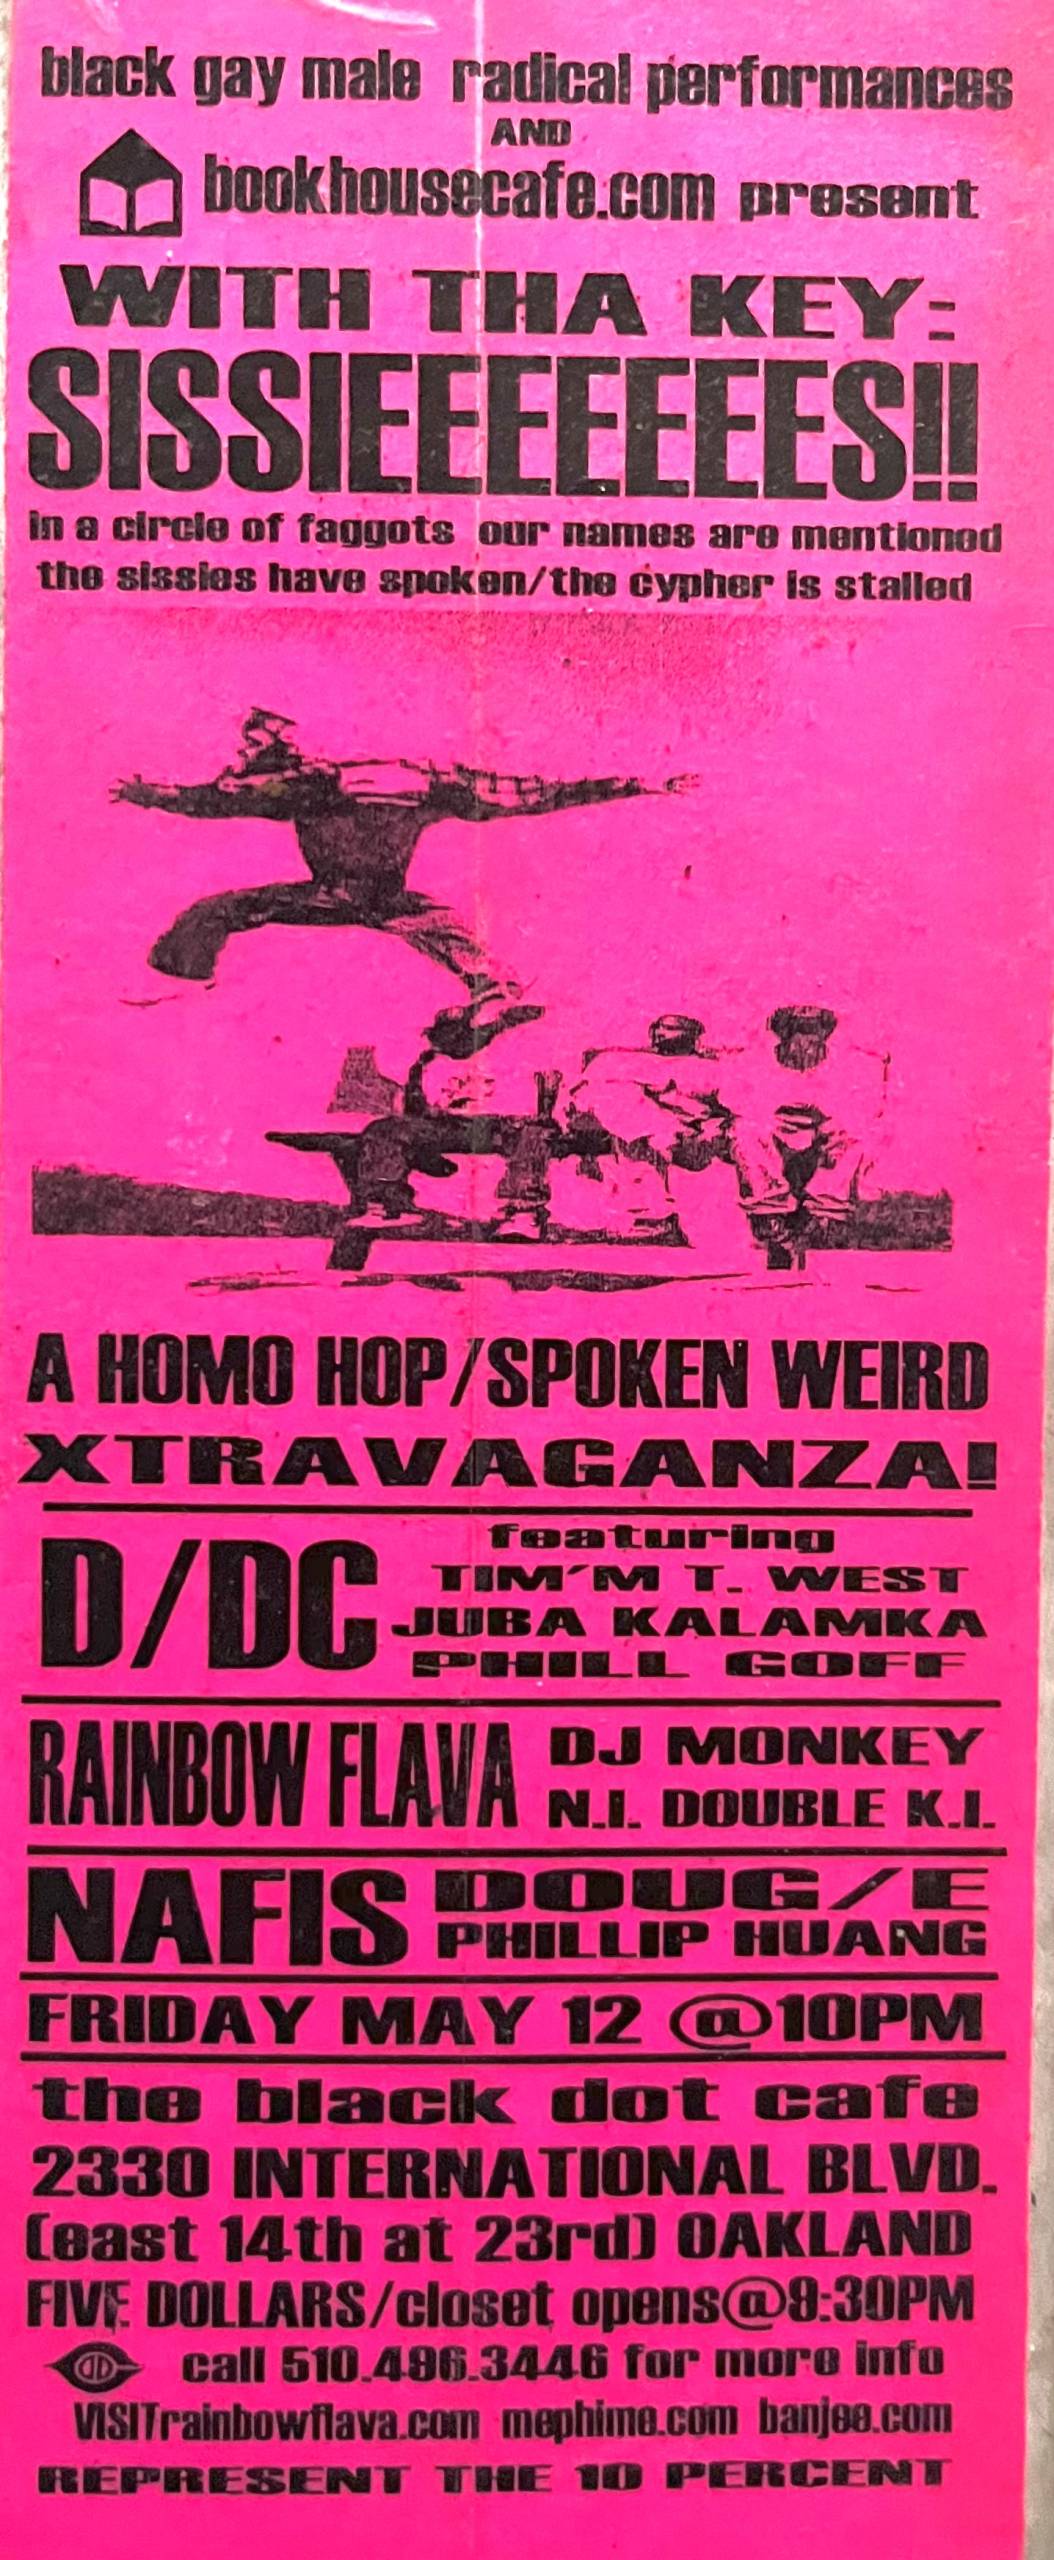 A pink flyer with black text advertises "A homo hop/spoken weird xtravaganza!"